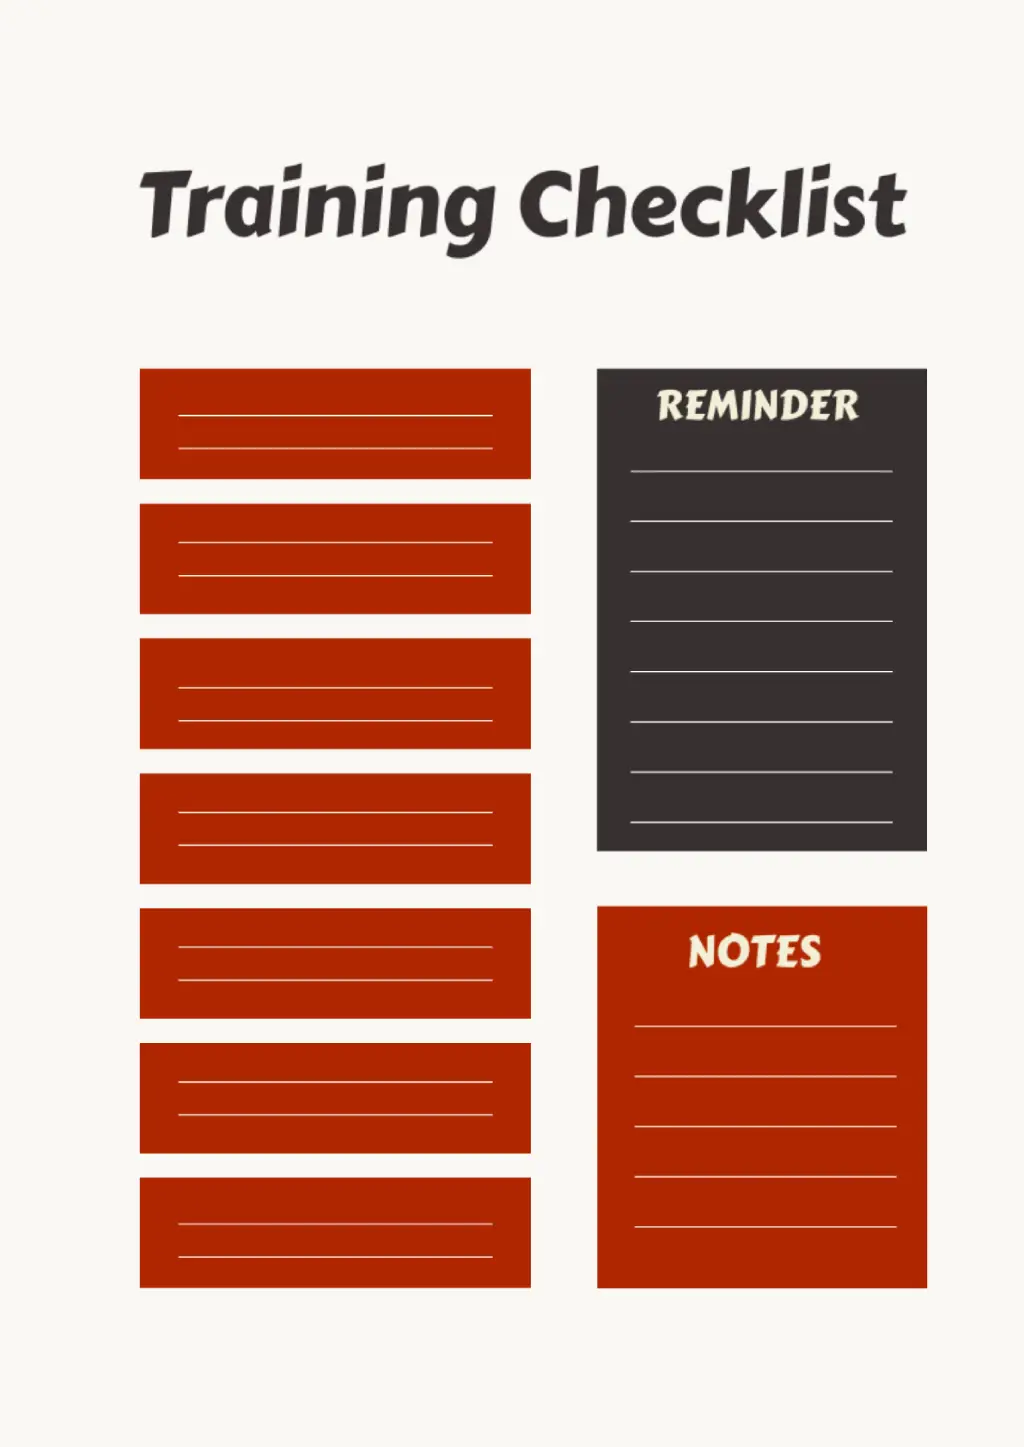 Training Checklist Template for Google Docs